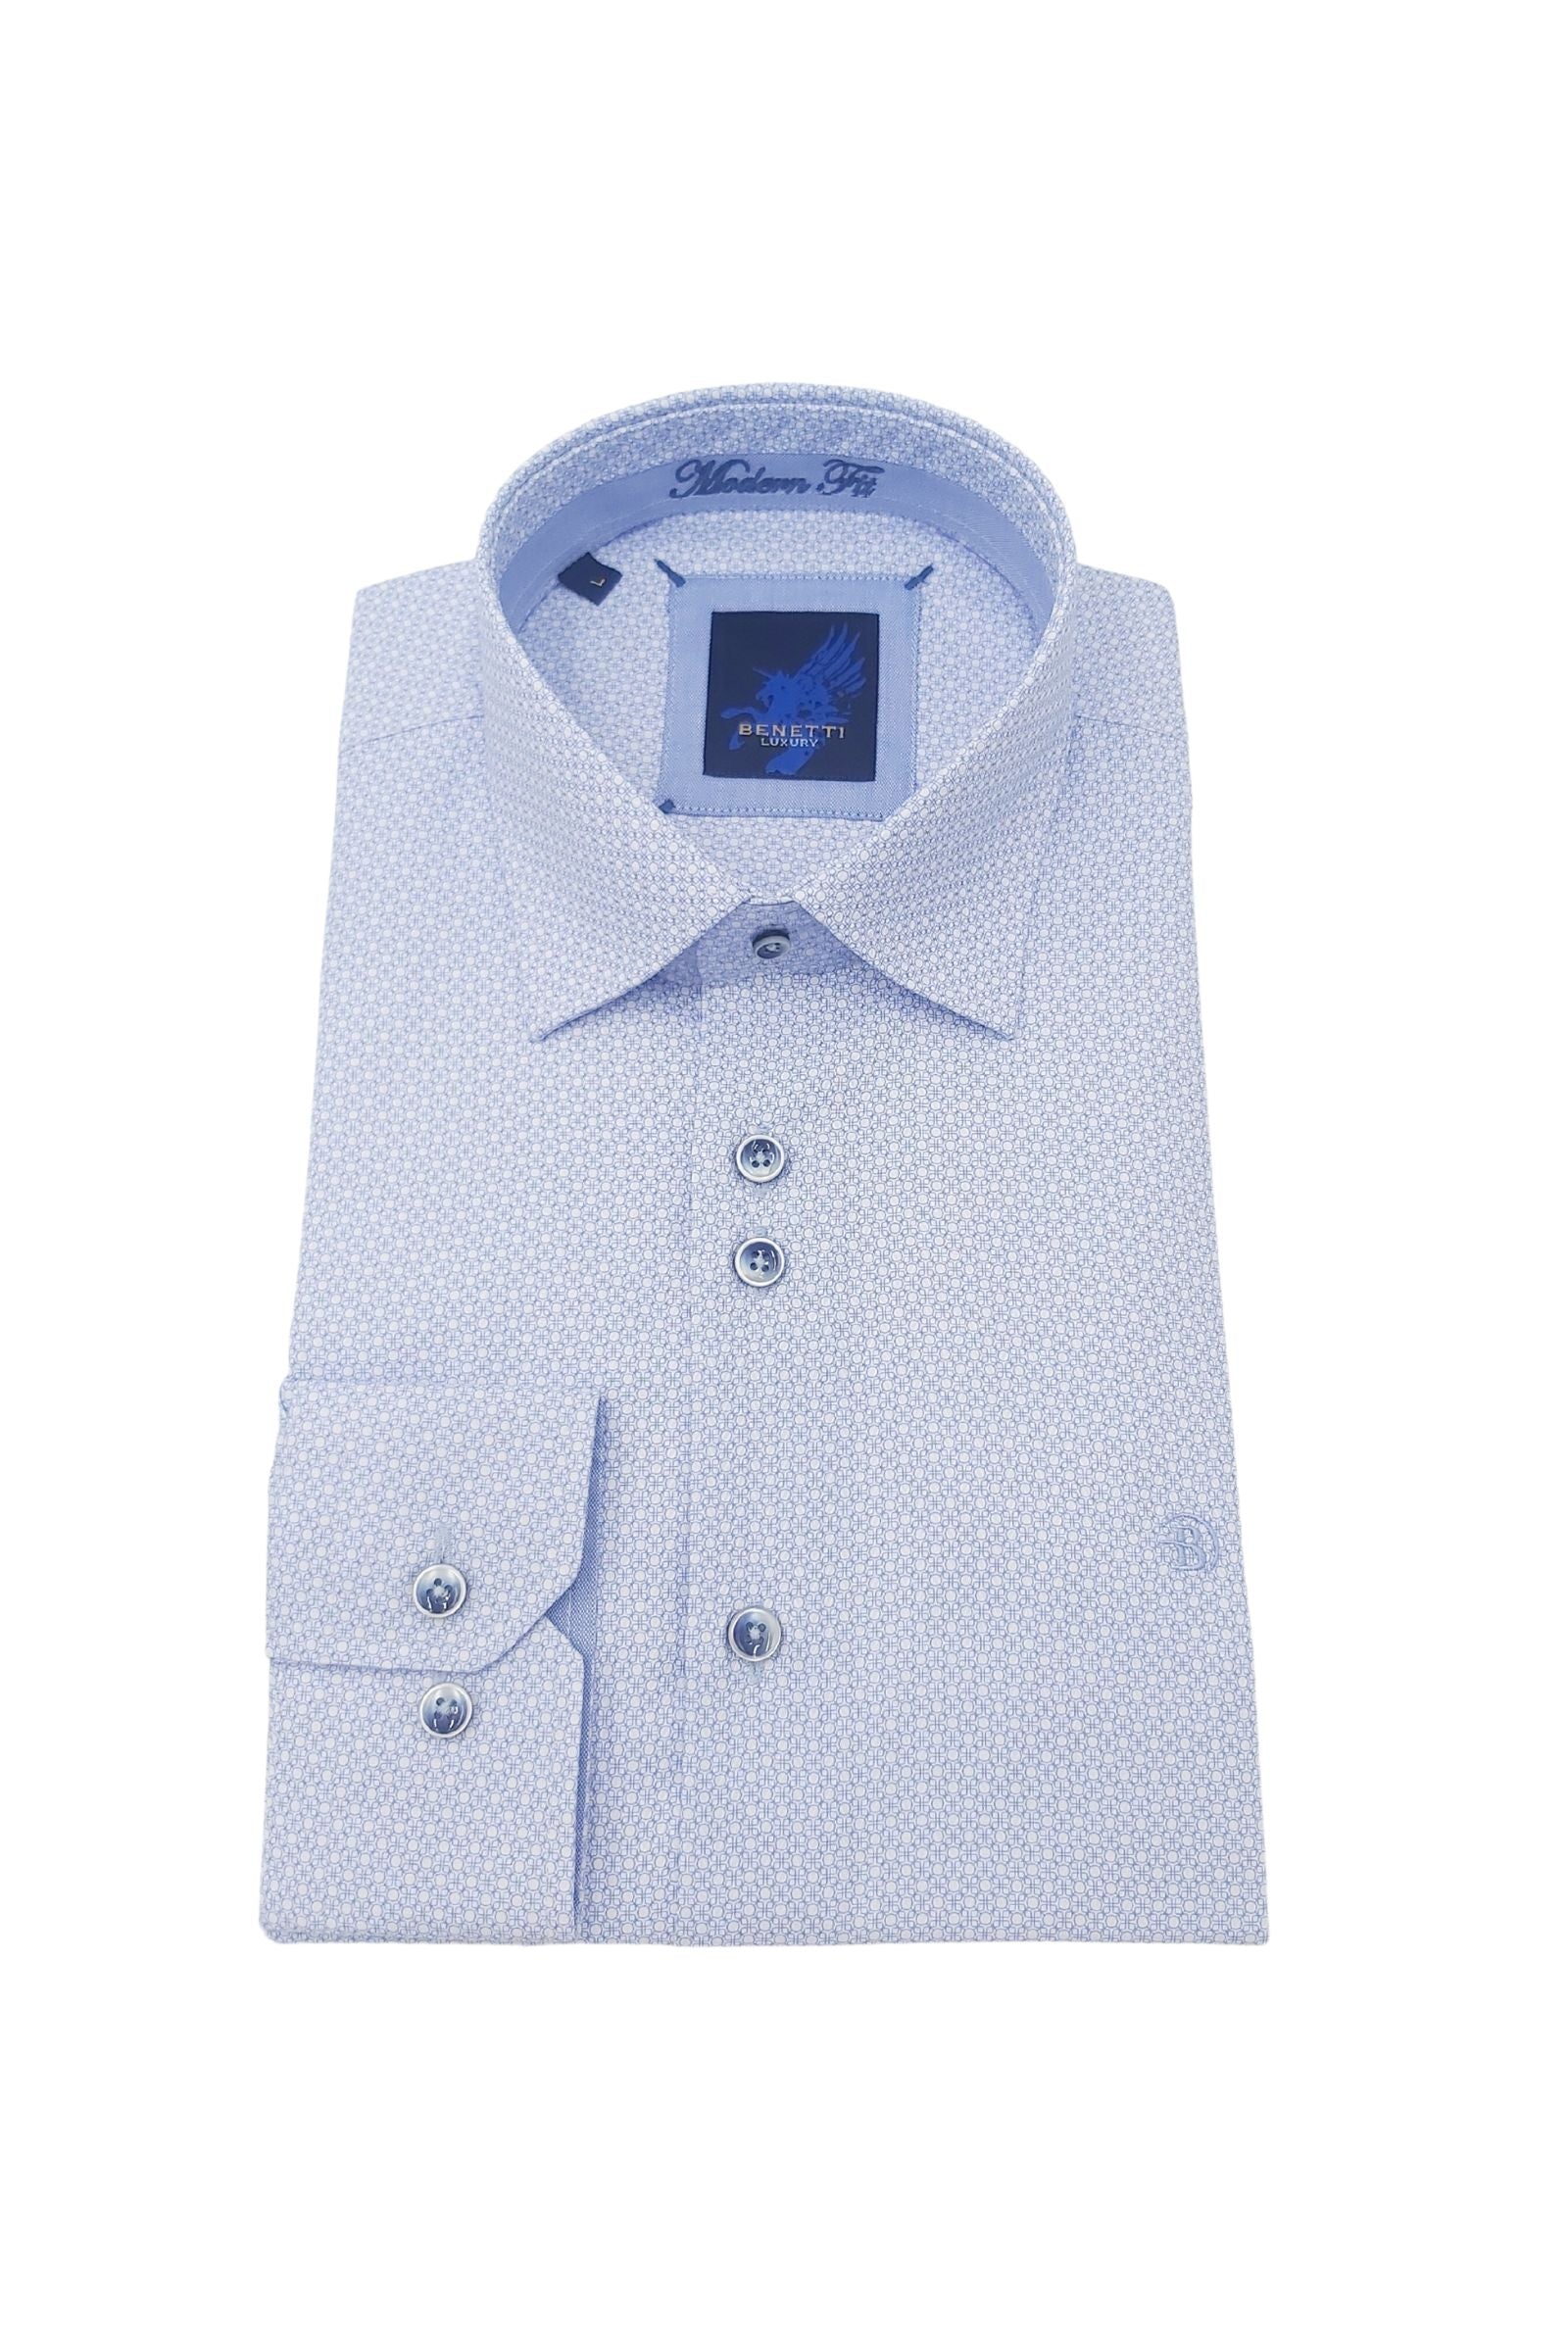 Men's Ural Shirt - Blue-Front View